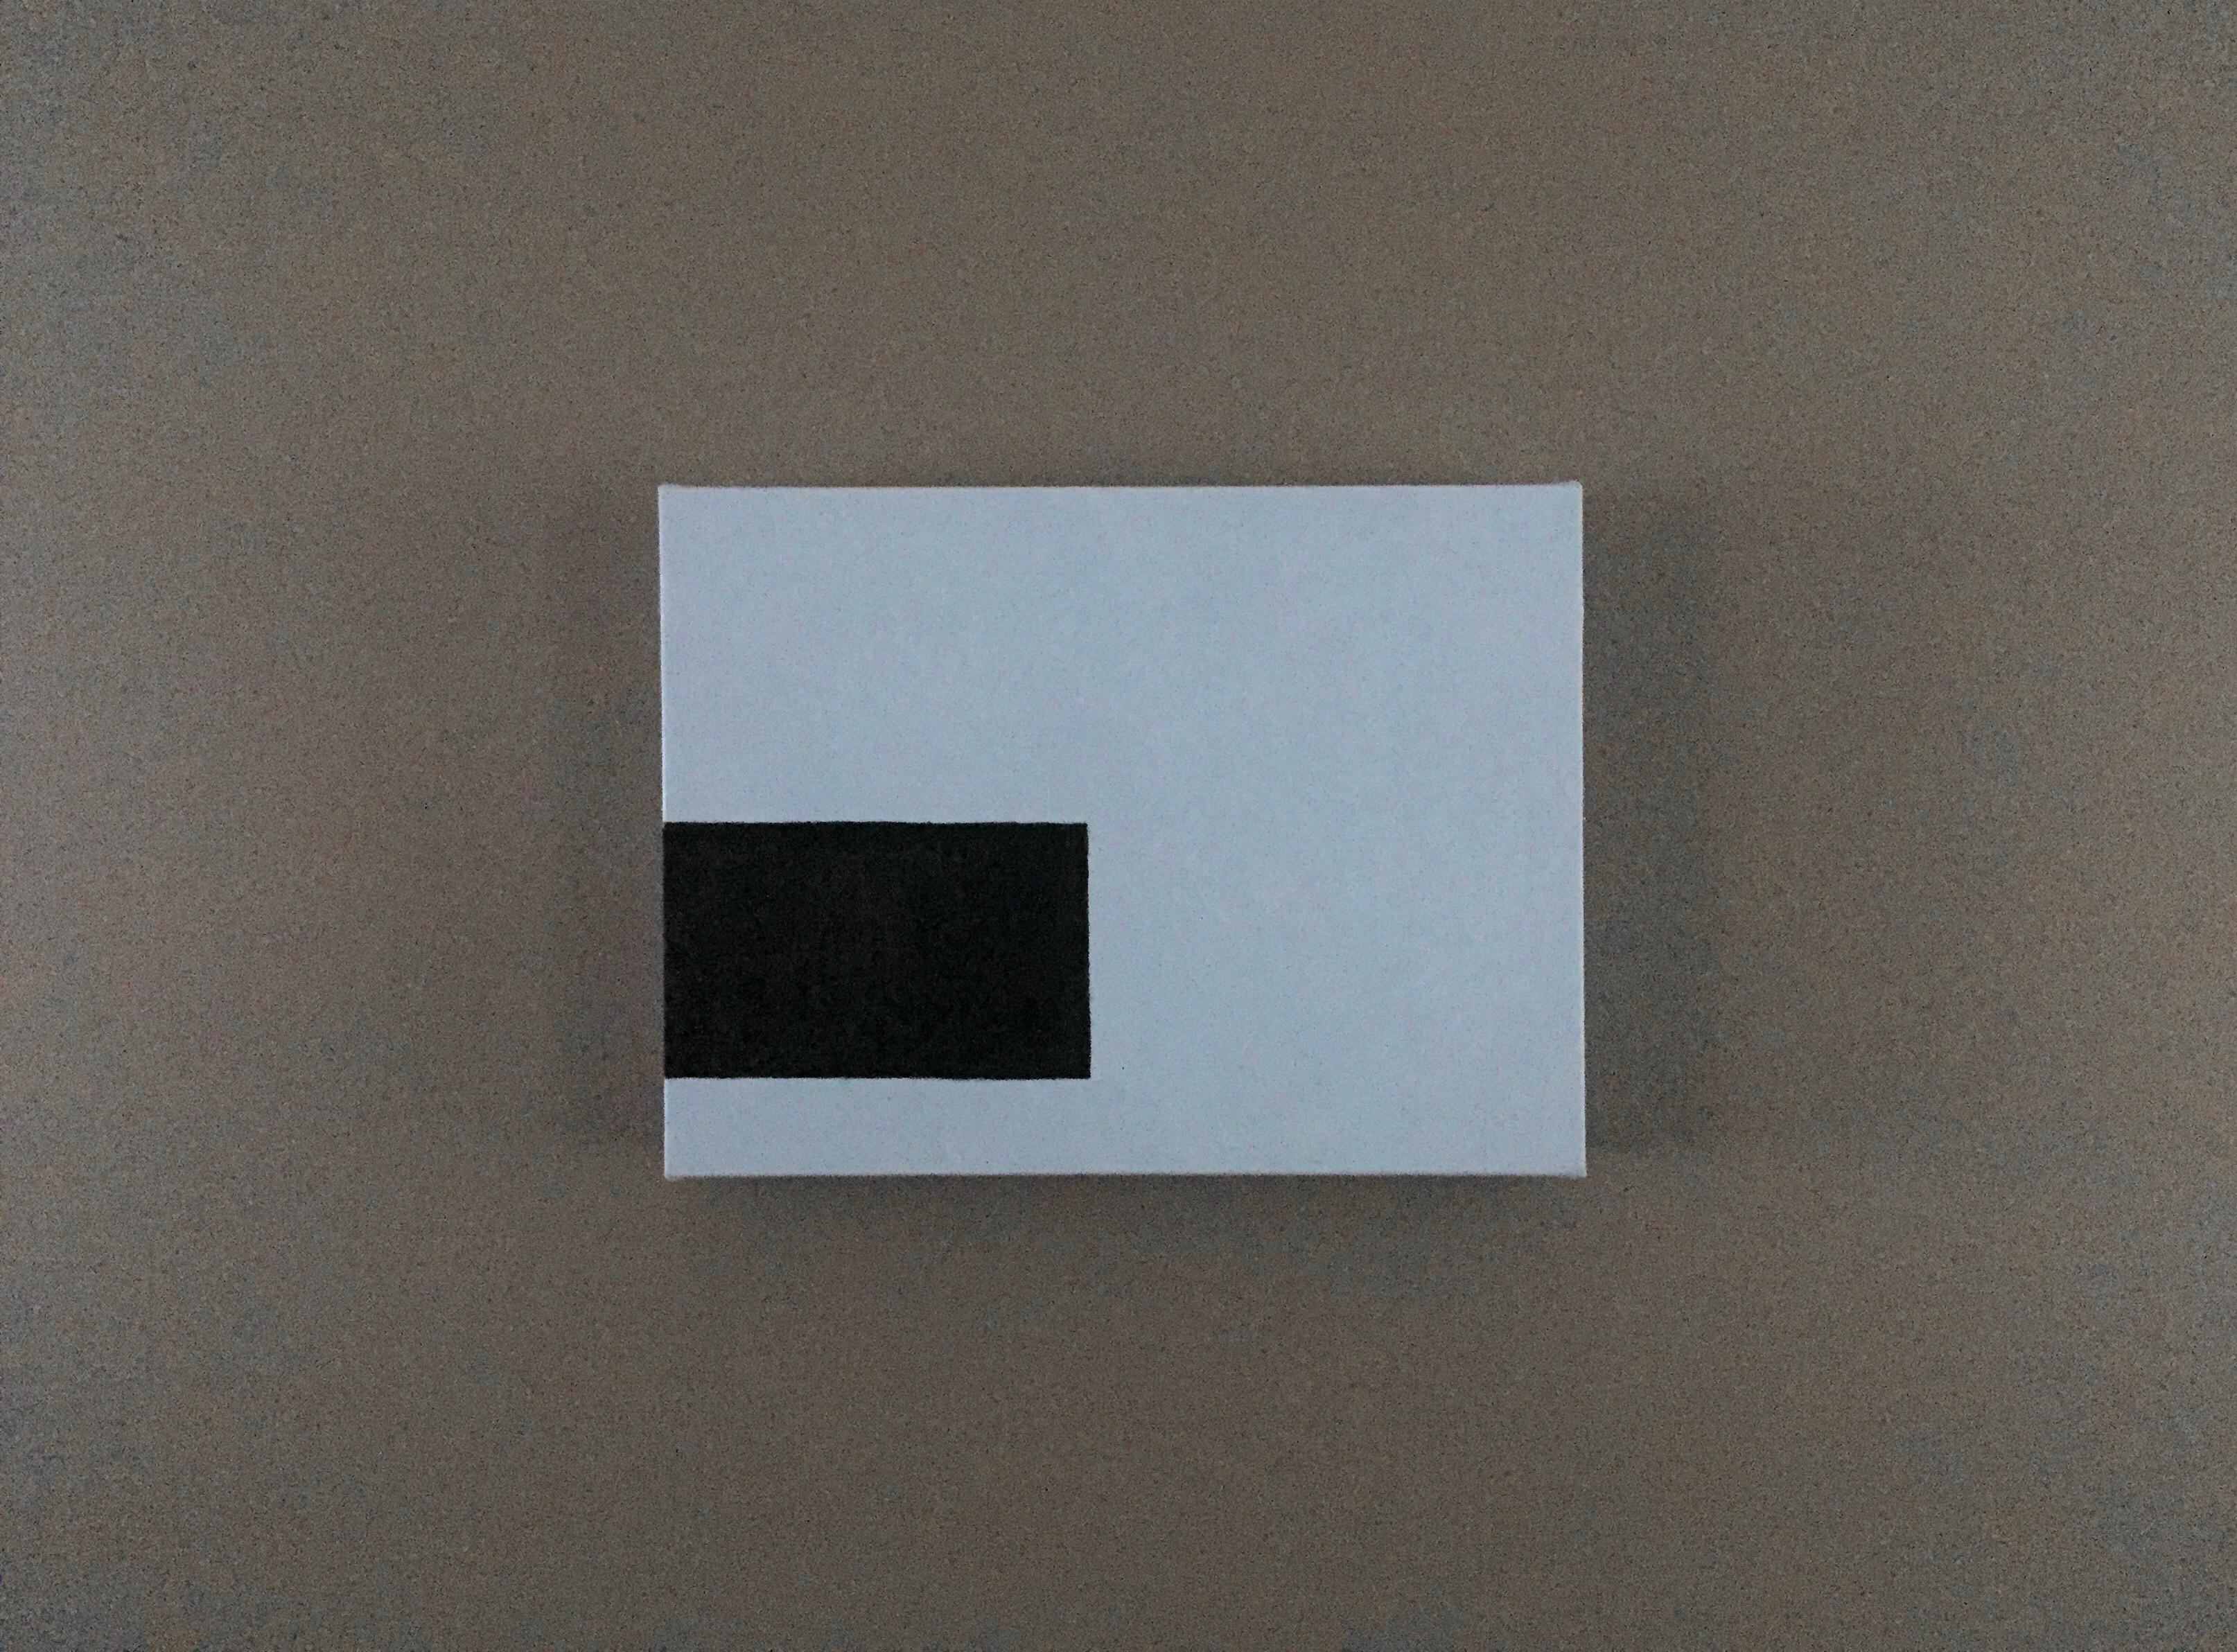 Prada Blue 2 (9"x12", Minimal, Geometric, Black, Blue, Abstract Painting)